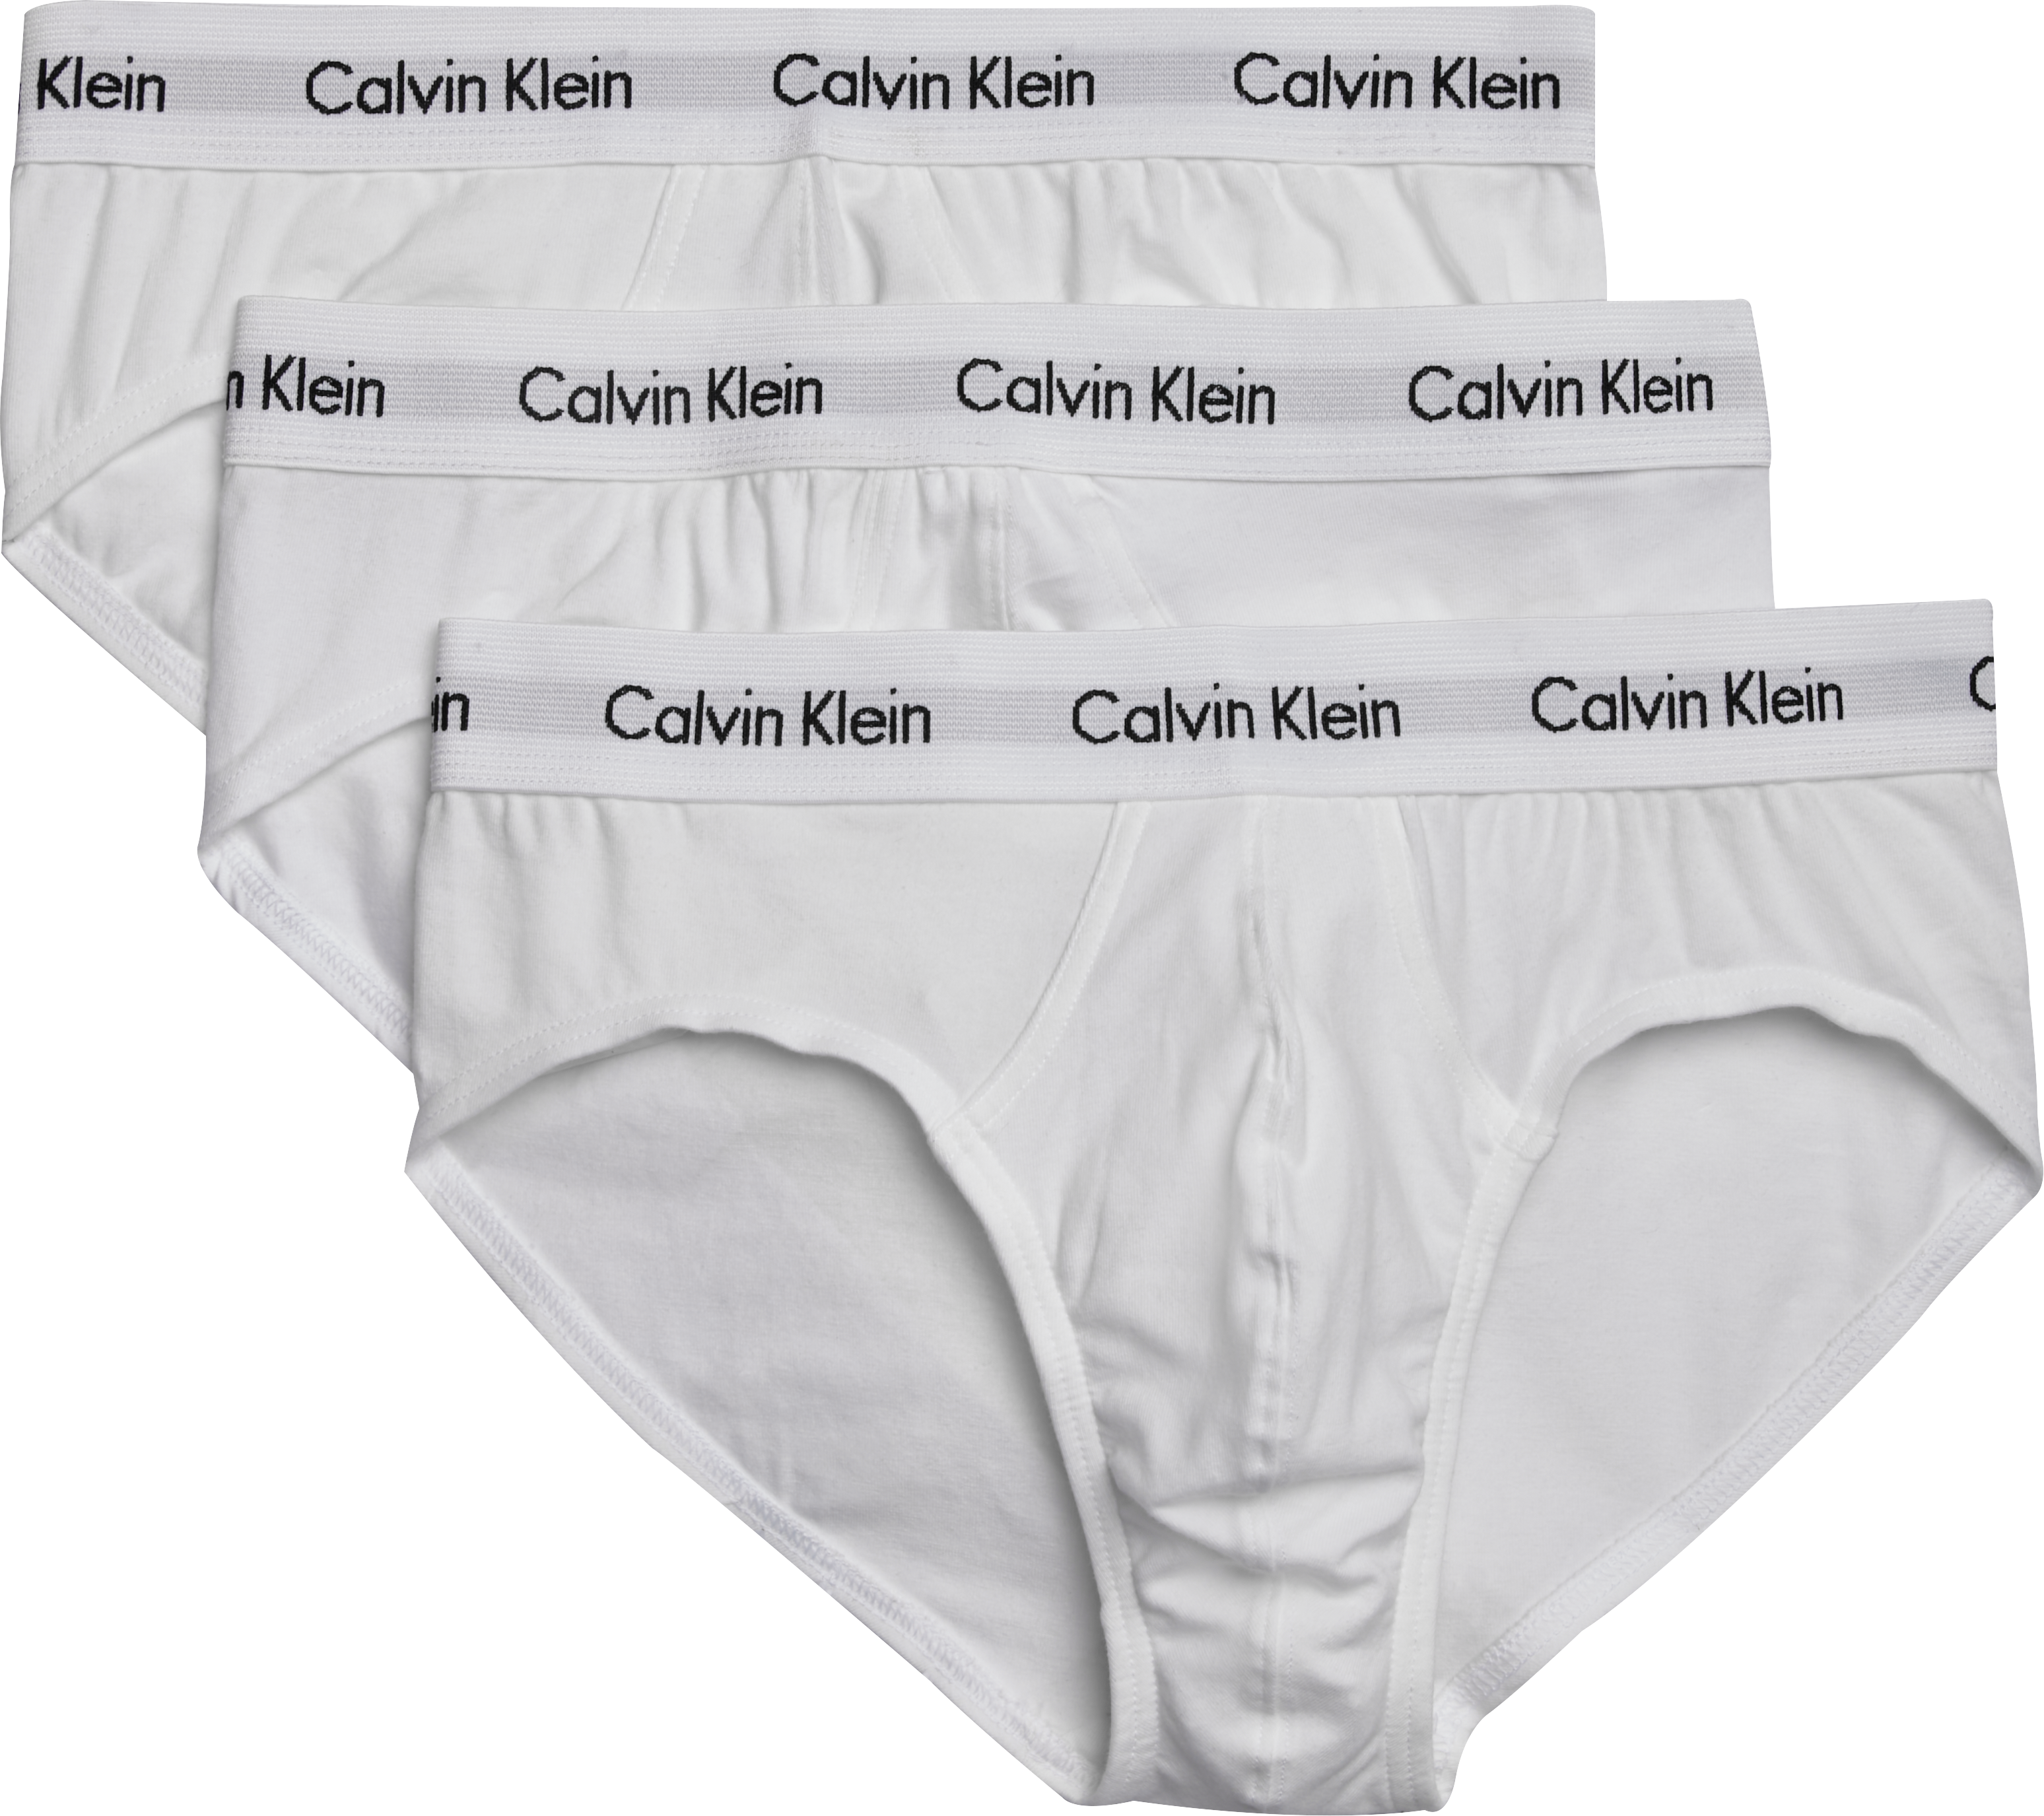 Calvin Klein Classic Fit Cotton Briefs, 3-pack, White, Men's